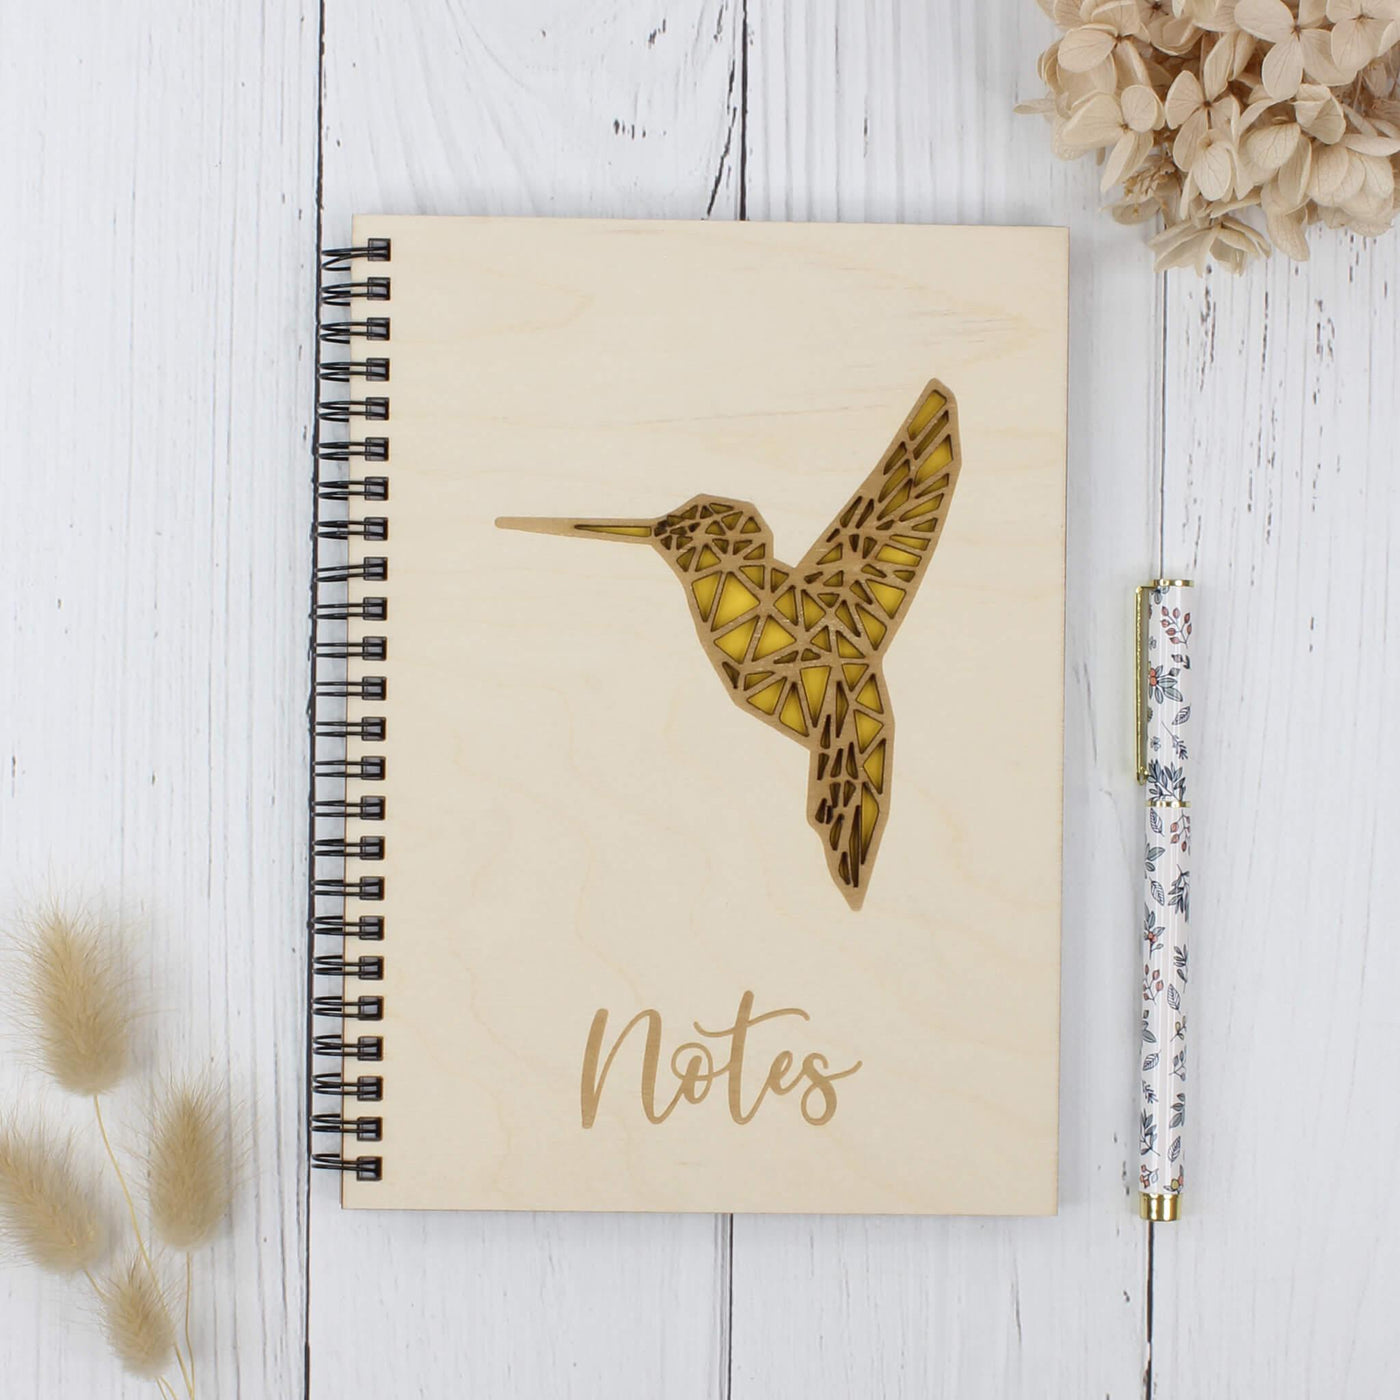 Personalised wooden notebook - hummingbird - yellow